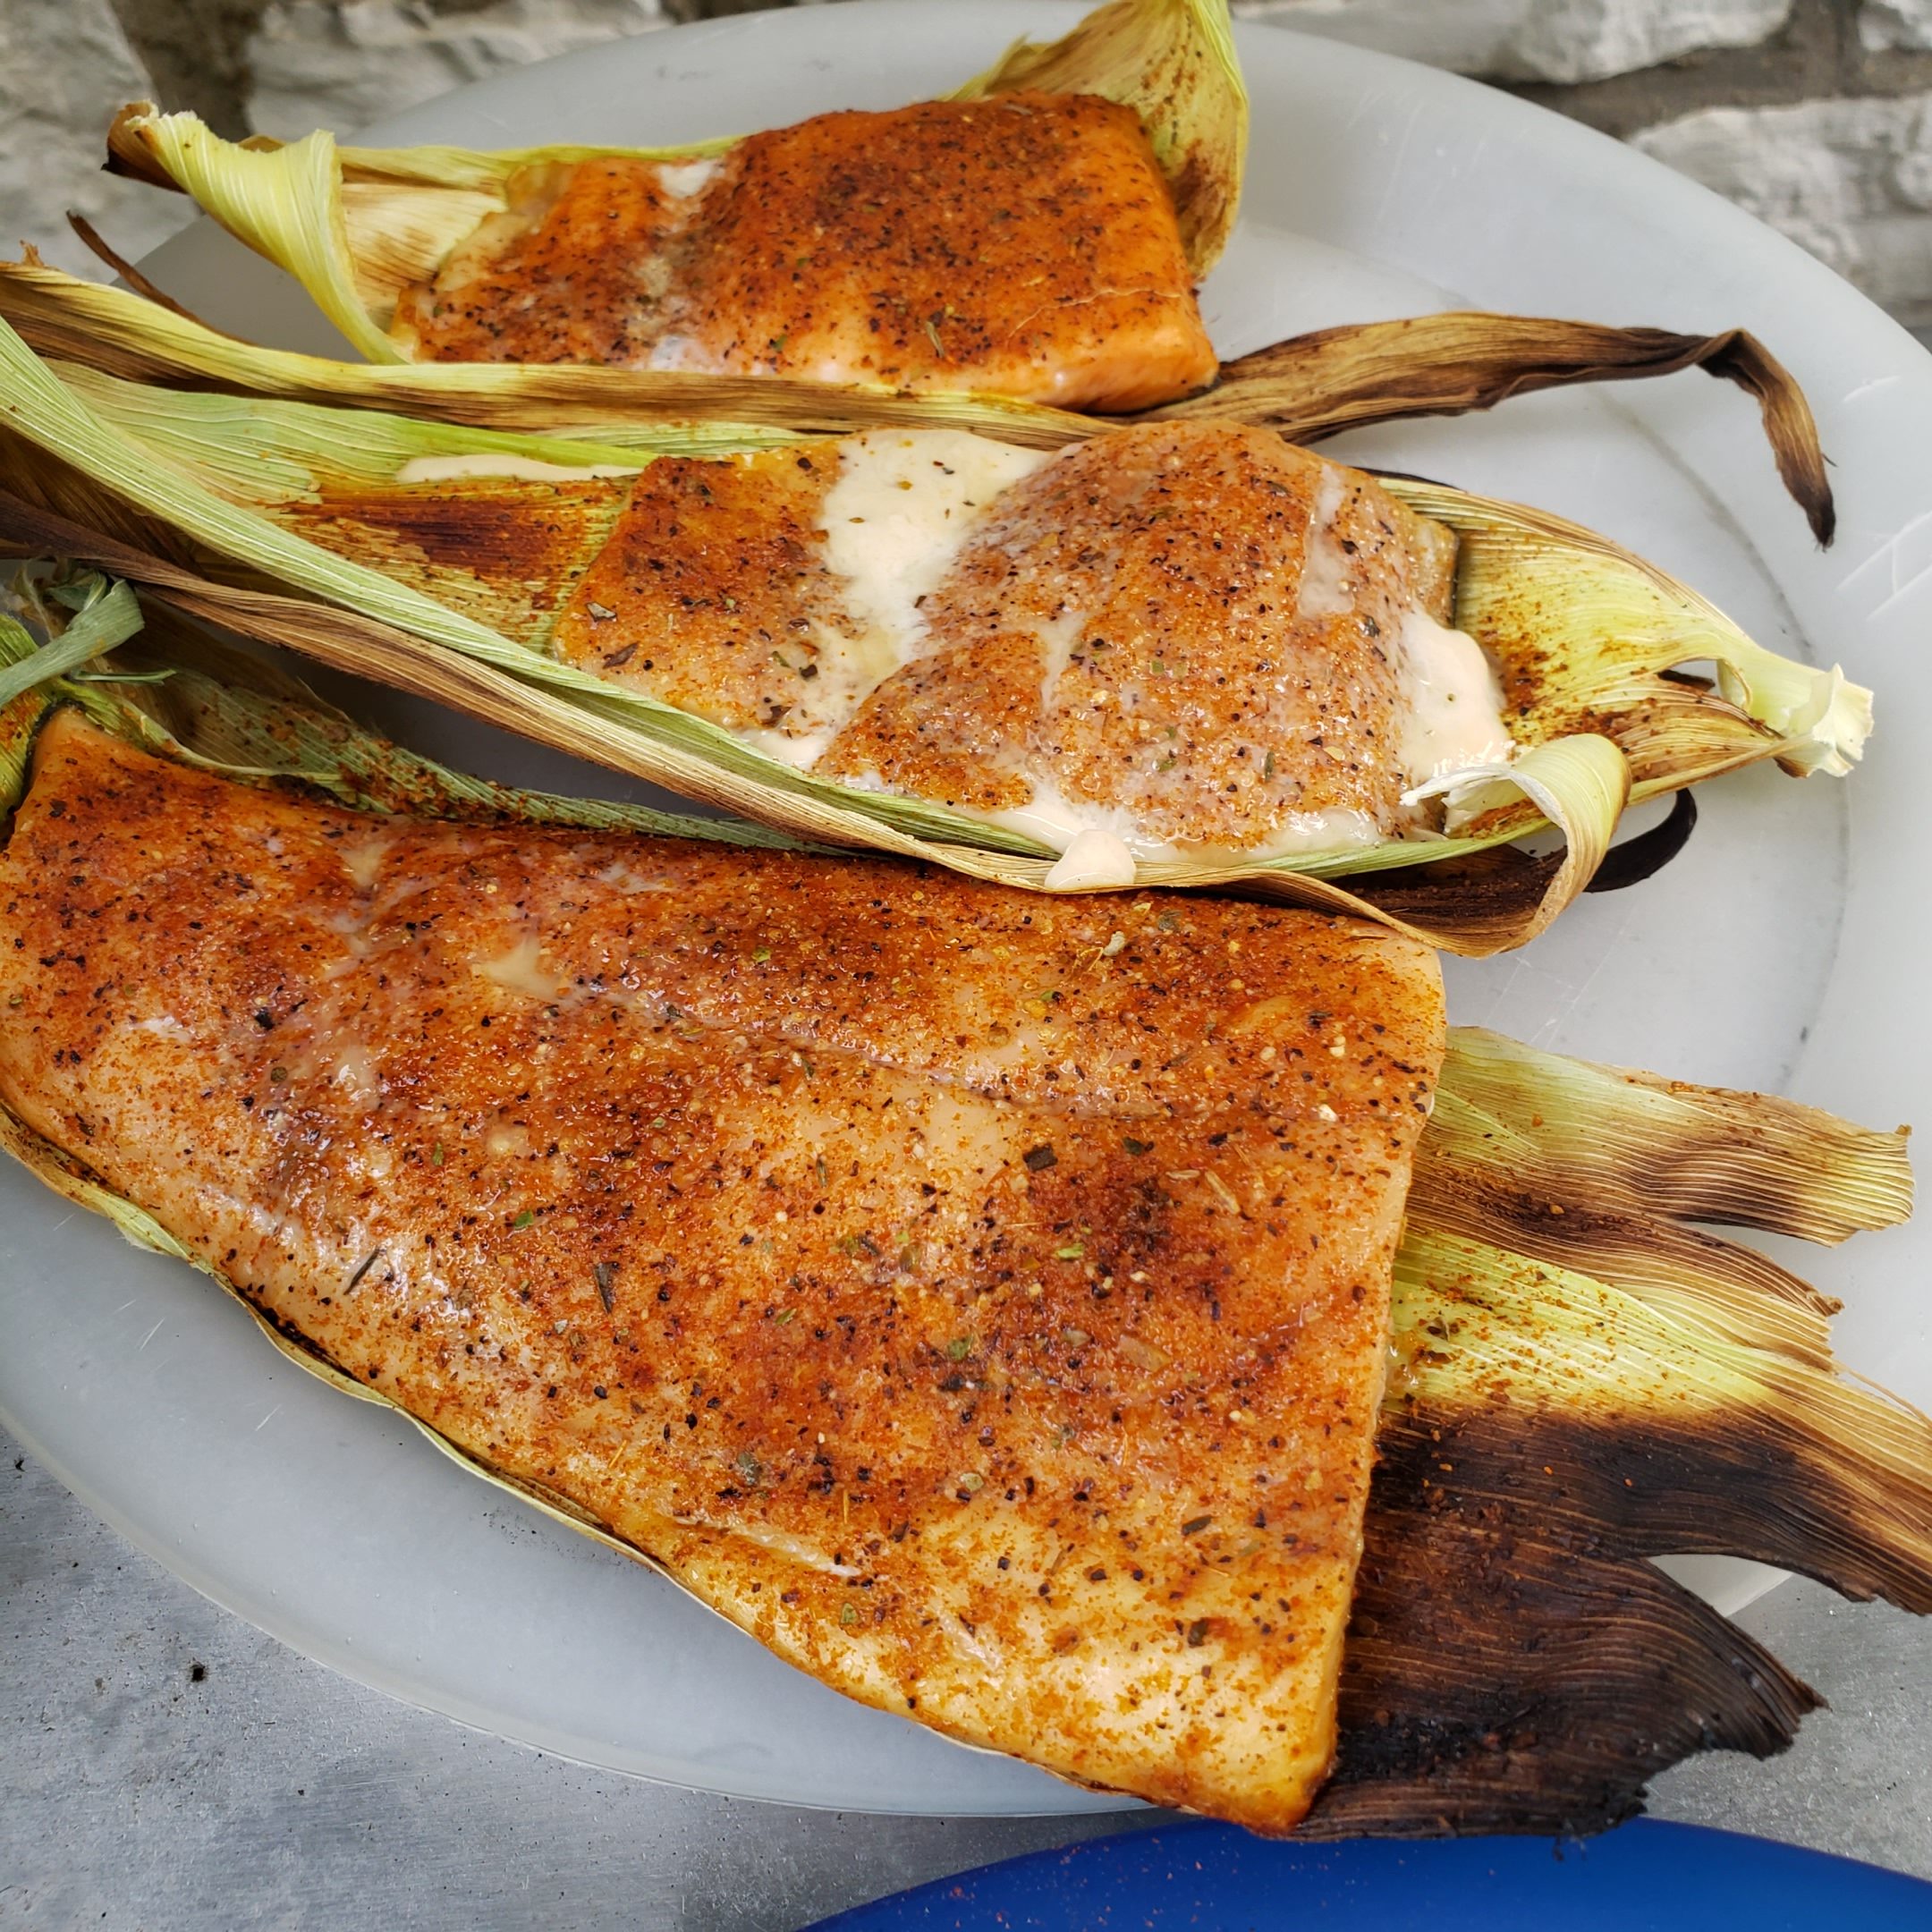 Cutco Cutlery on Instagram: Like to prepare fresh fish at home